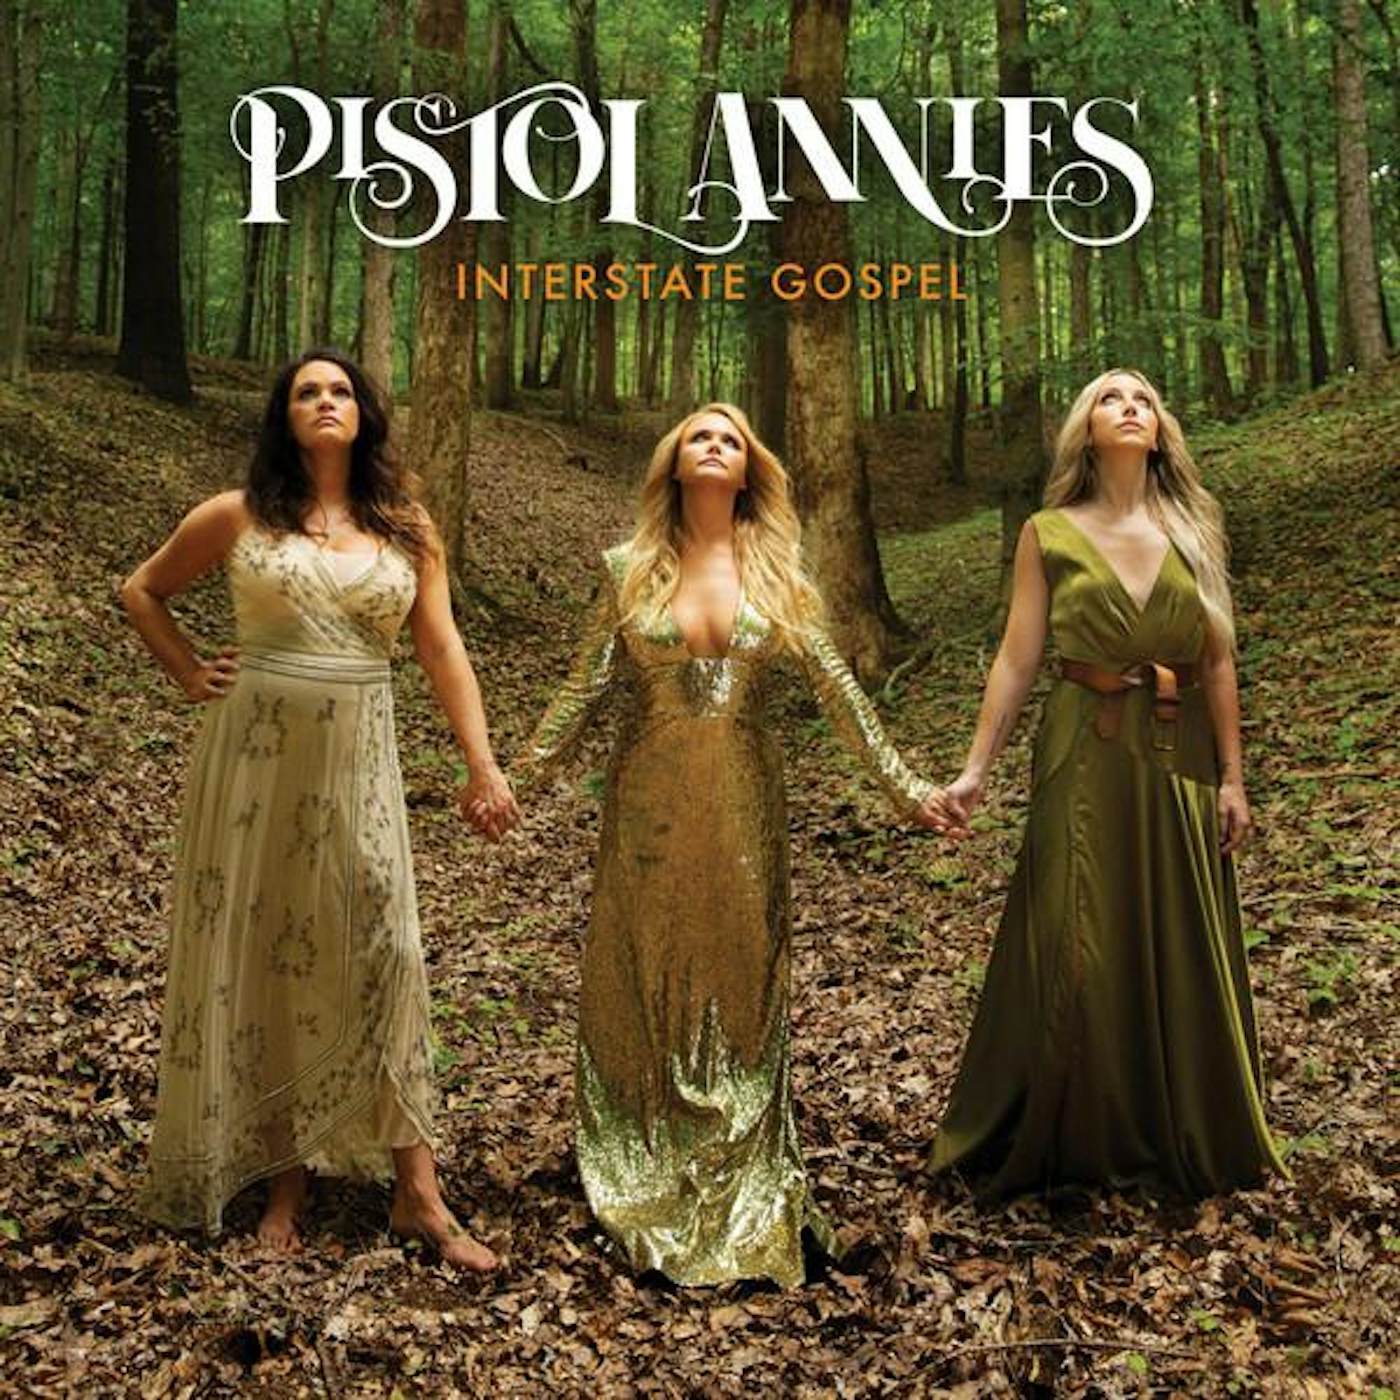 Pistol Annies INTERSTATE GOSPEL CD